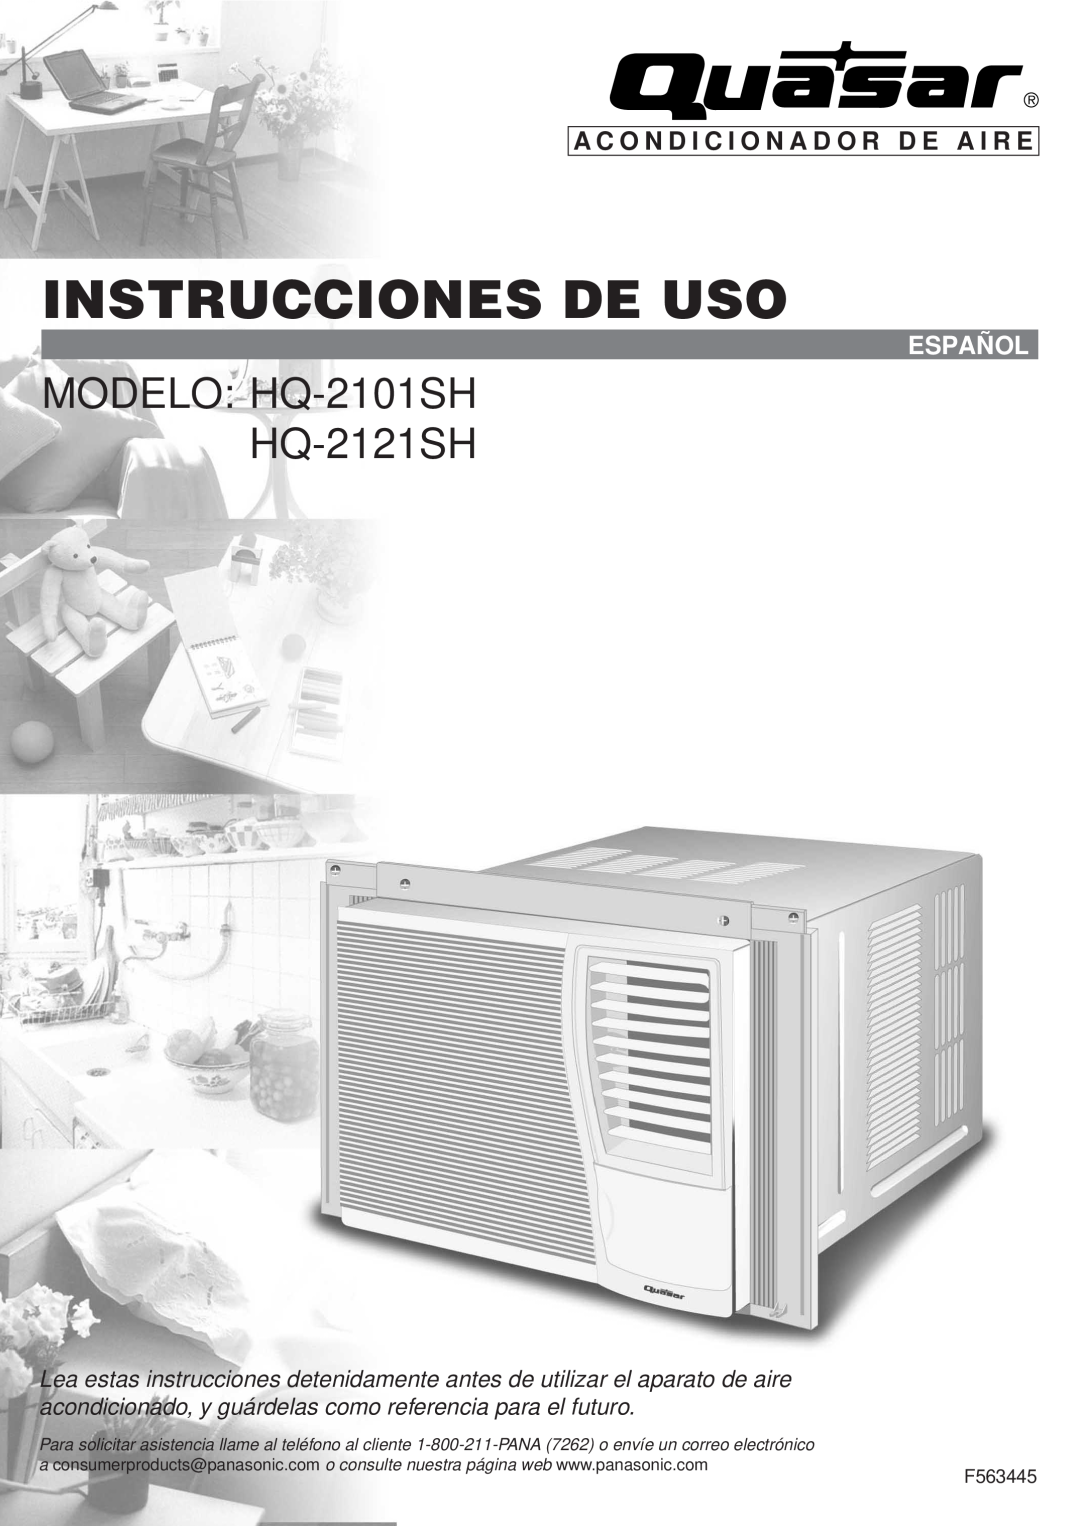 Panasonic Instrucciones De Uso, MODELO HQ-2101SH HQ-2121SH, A C O N D I C I O N A D O R D E A I R E, Español, F563445 